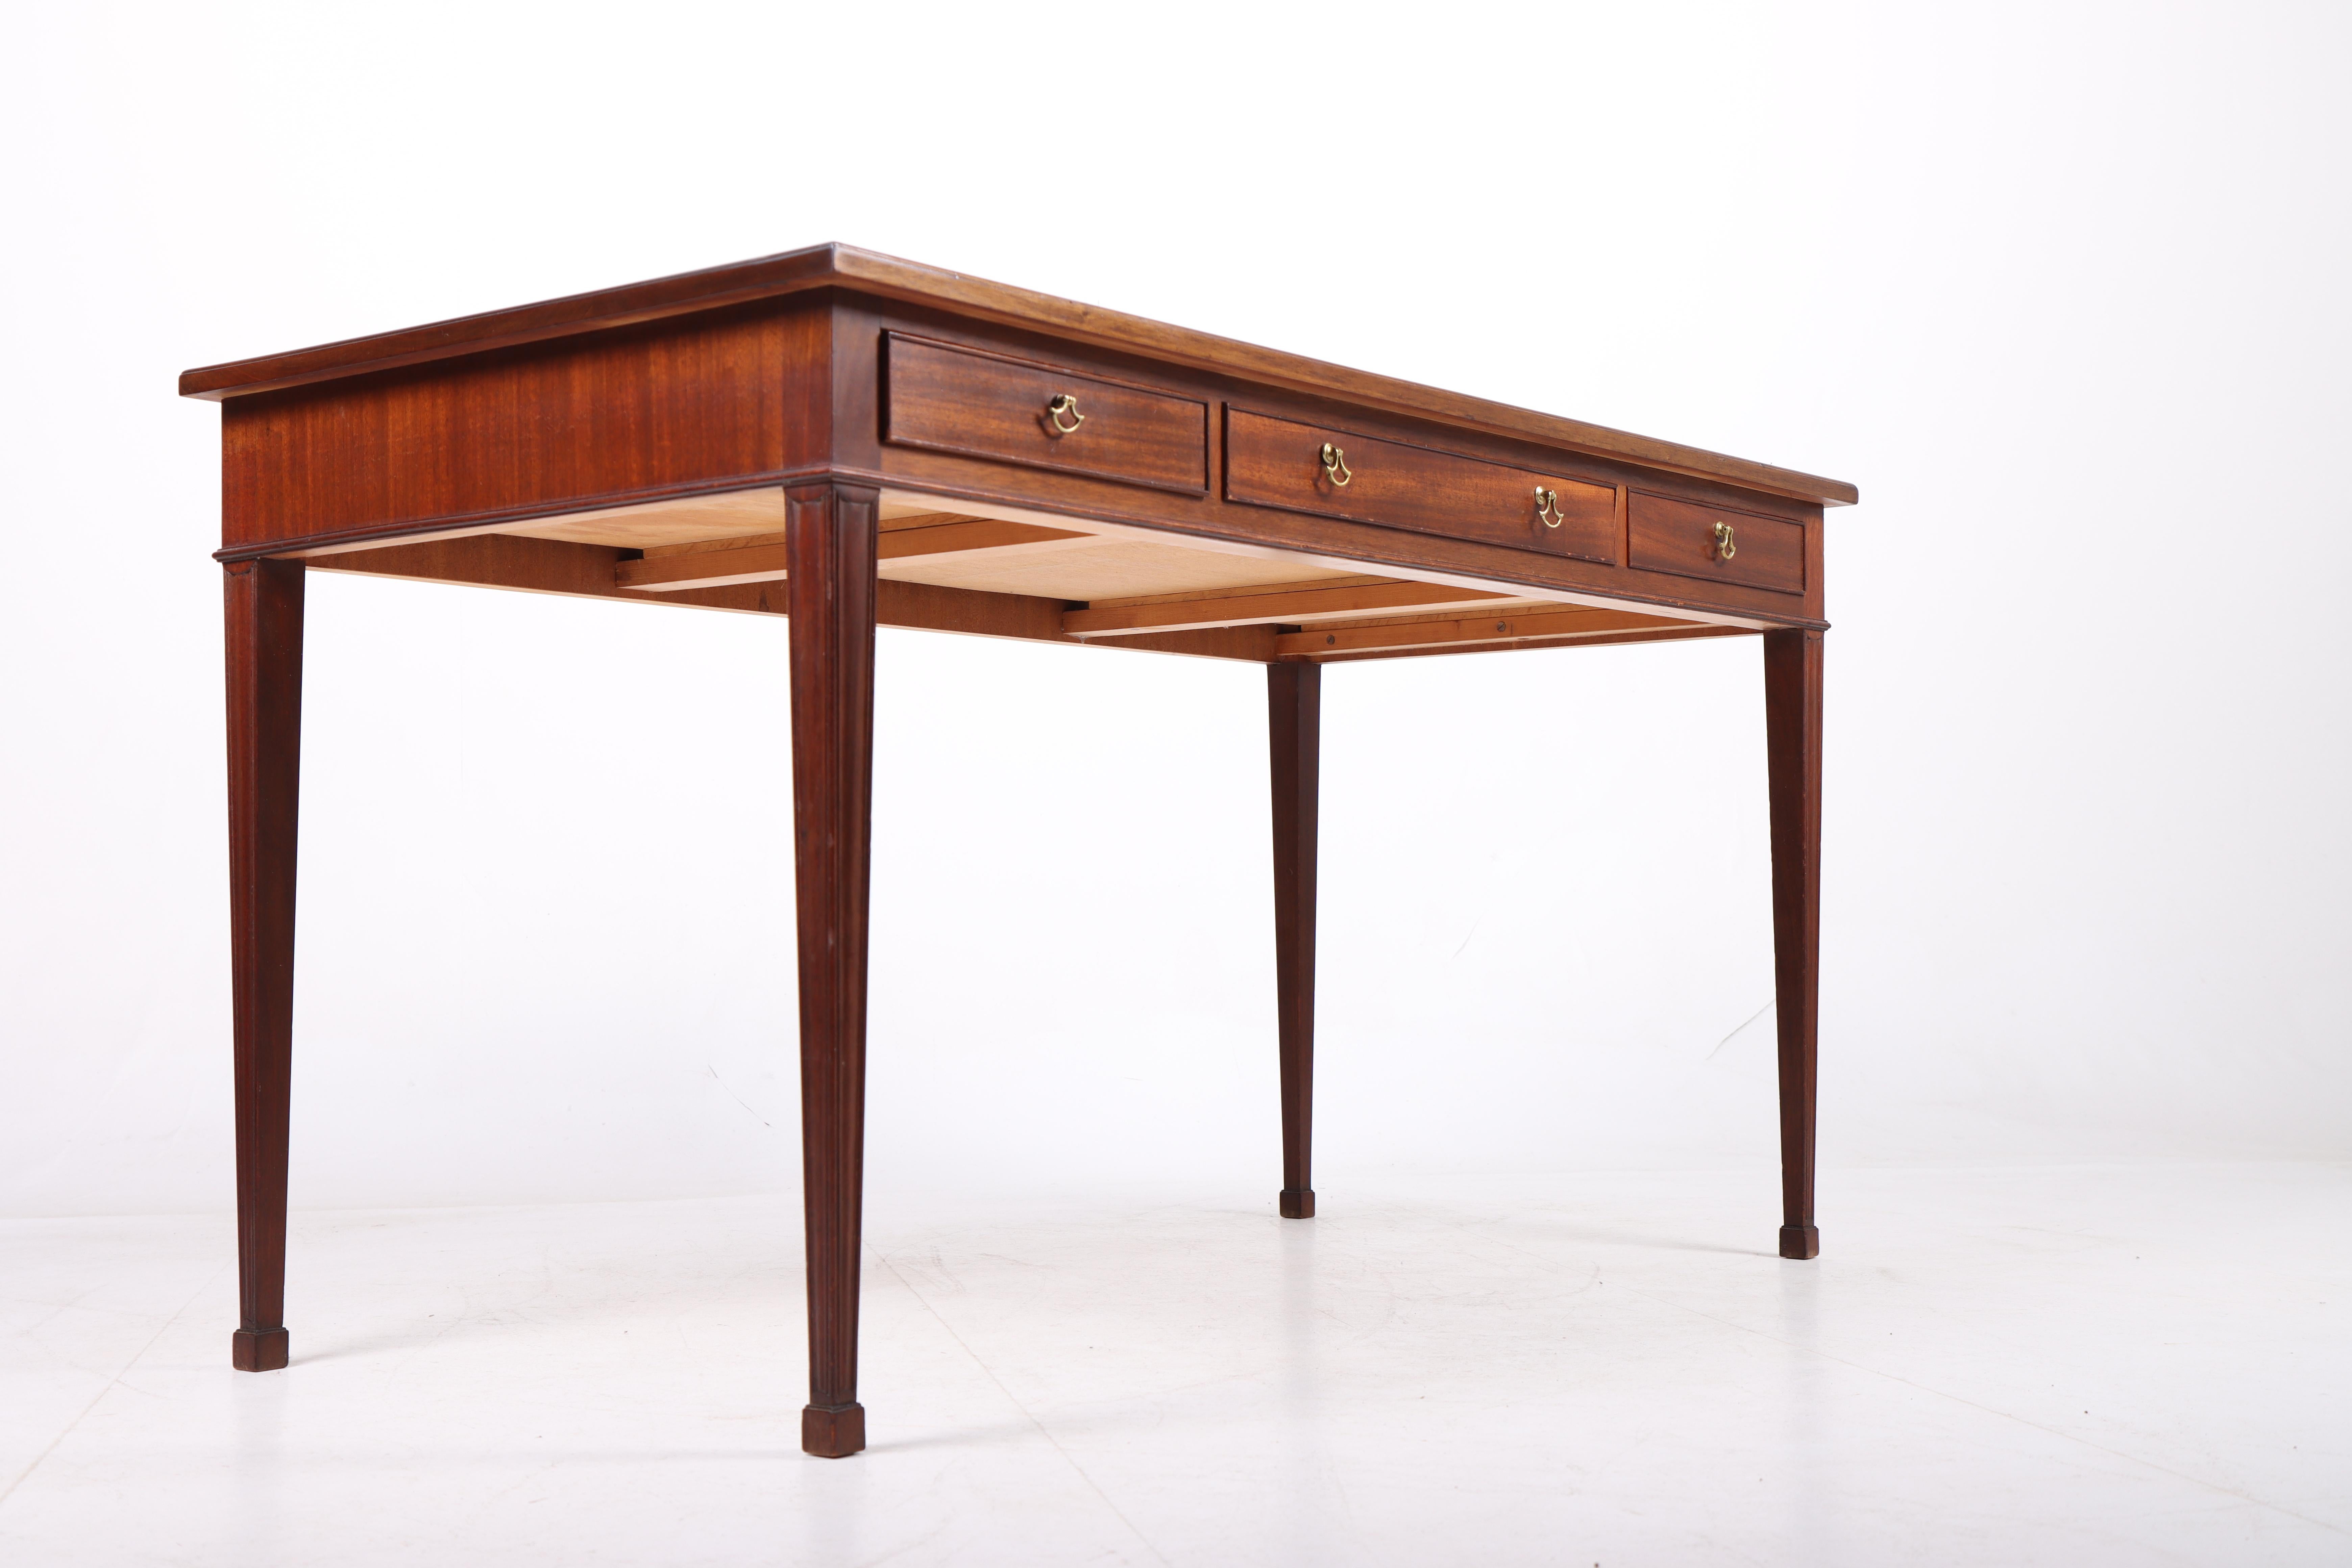 Mid-20th Century Midcentury Desk in Mahogany Designed by Frits Heningsen, 1950s